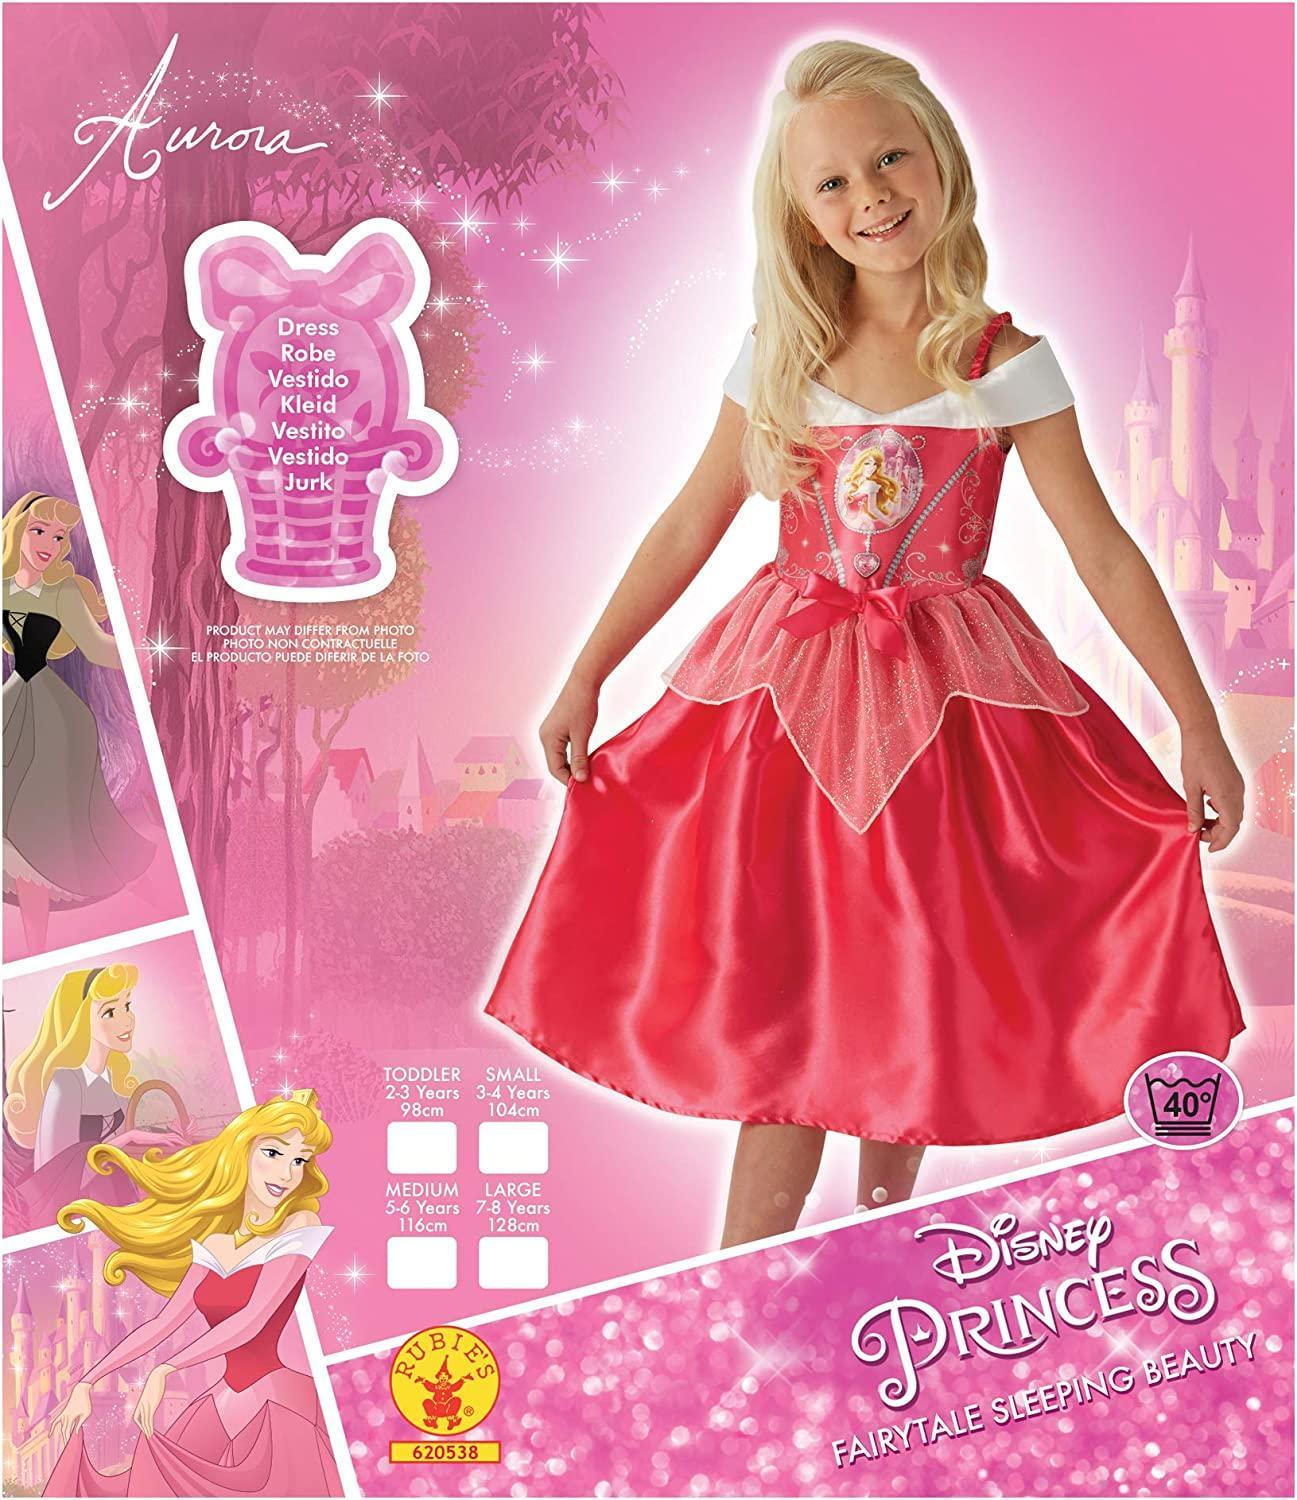 rubies costume principessa aurora taglia 2/3 anni